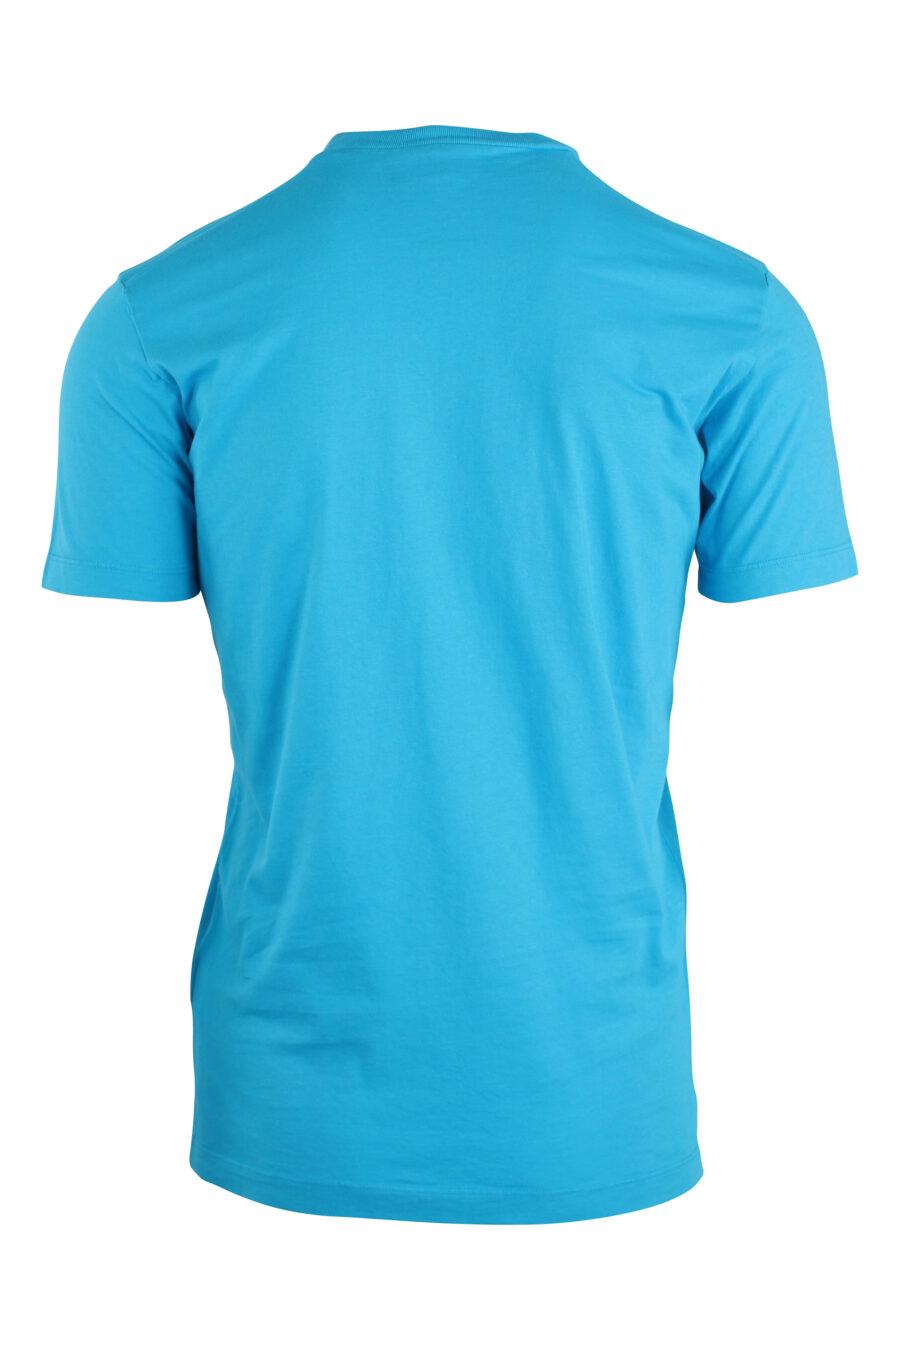 Hellblaues T-Shirt mit gelbem Maxilogo - IMG 8922